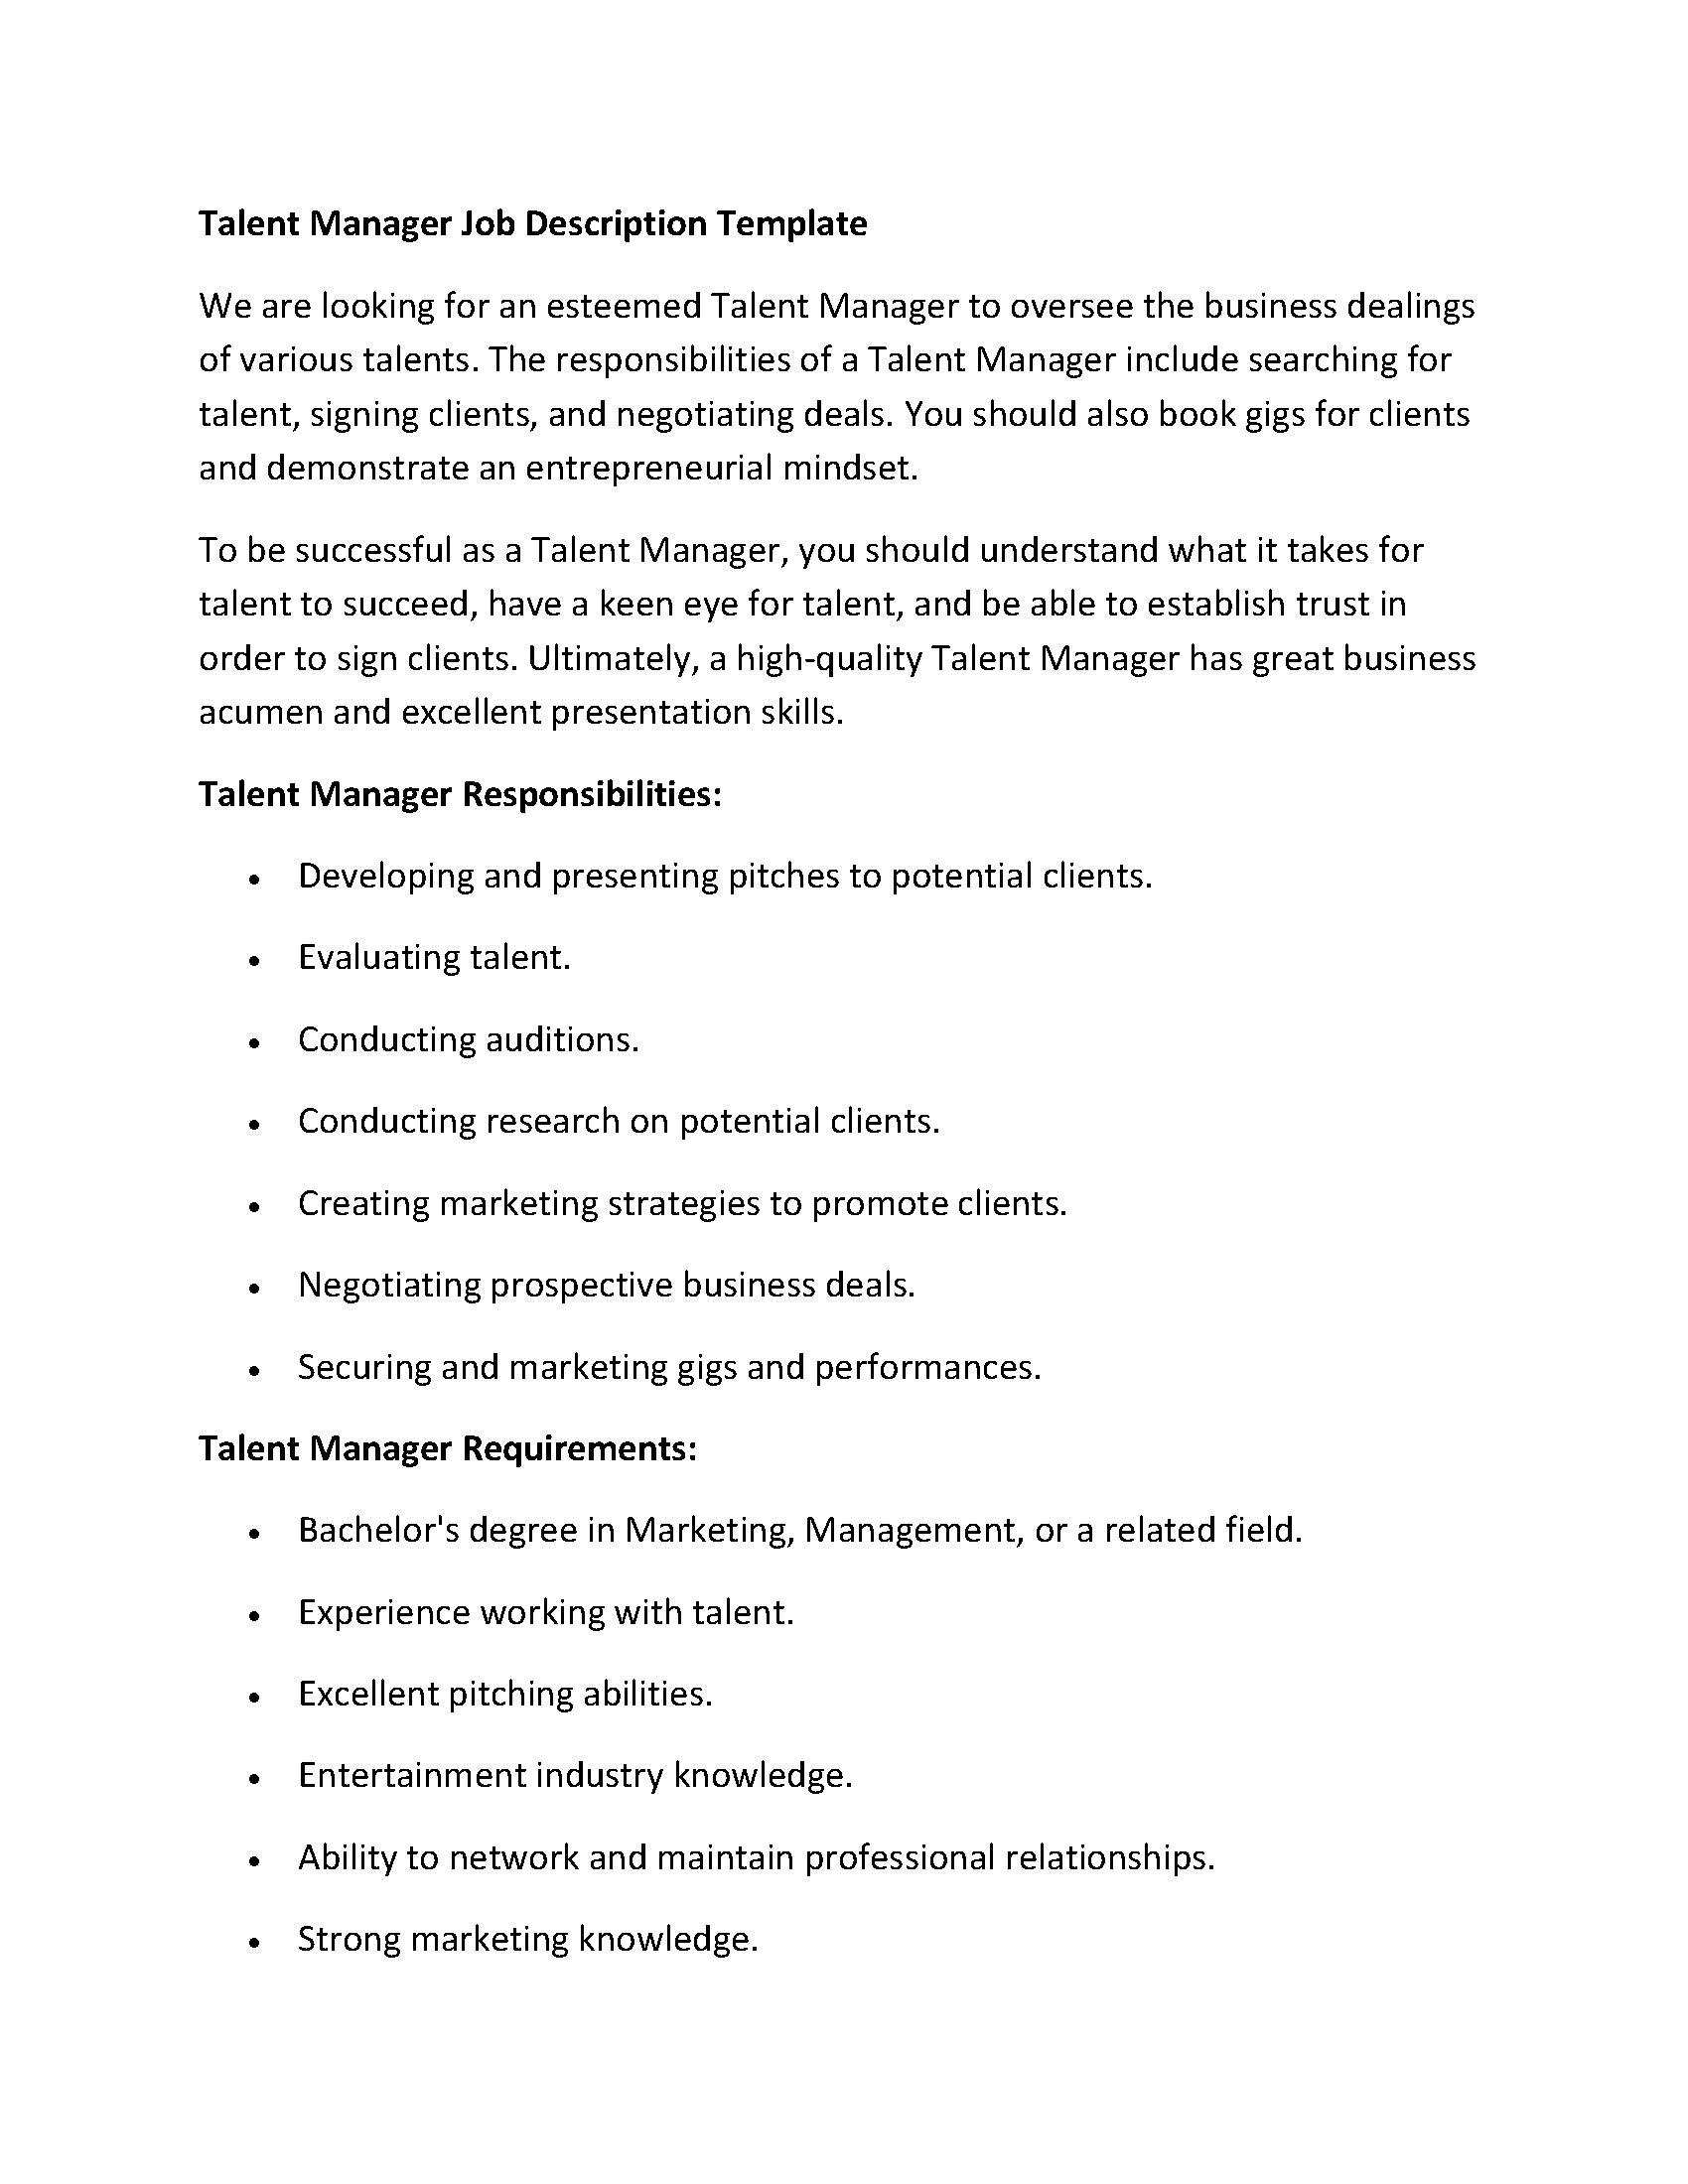 Talent Manager Job Description Template